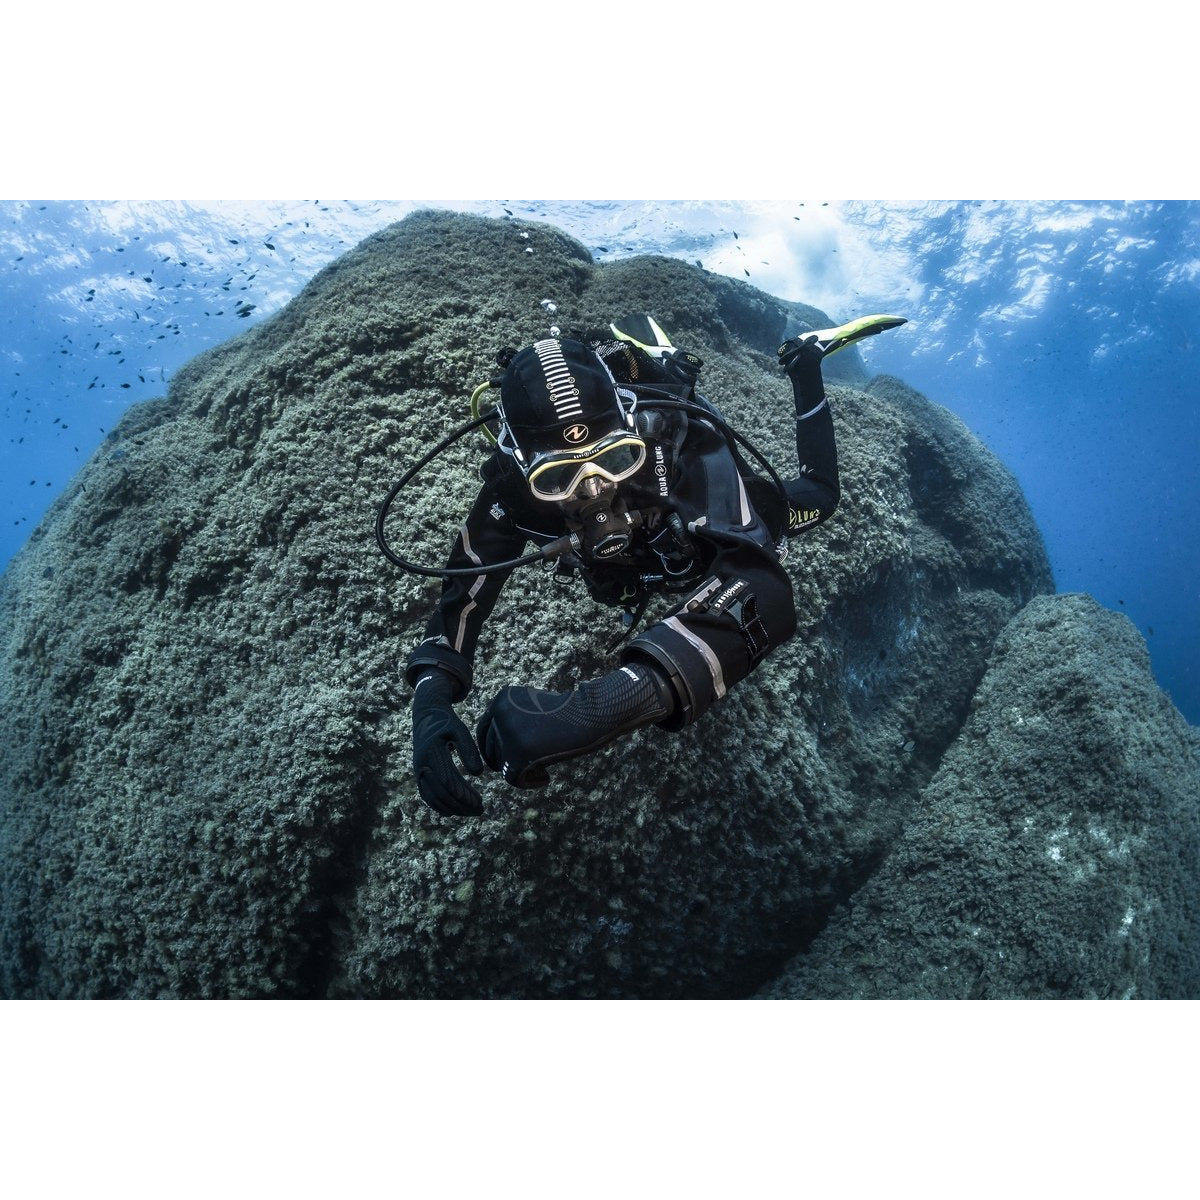 Blizzard Pro 4mm Drysuit - Men's - Oyster Diving Equipment